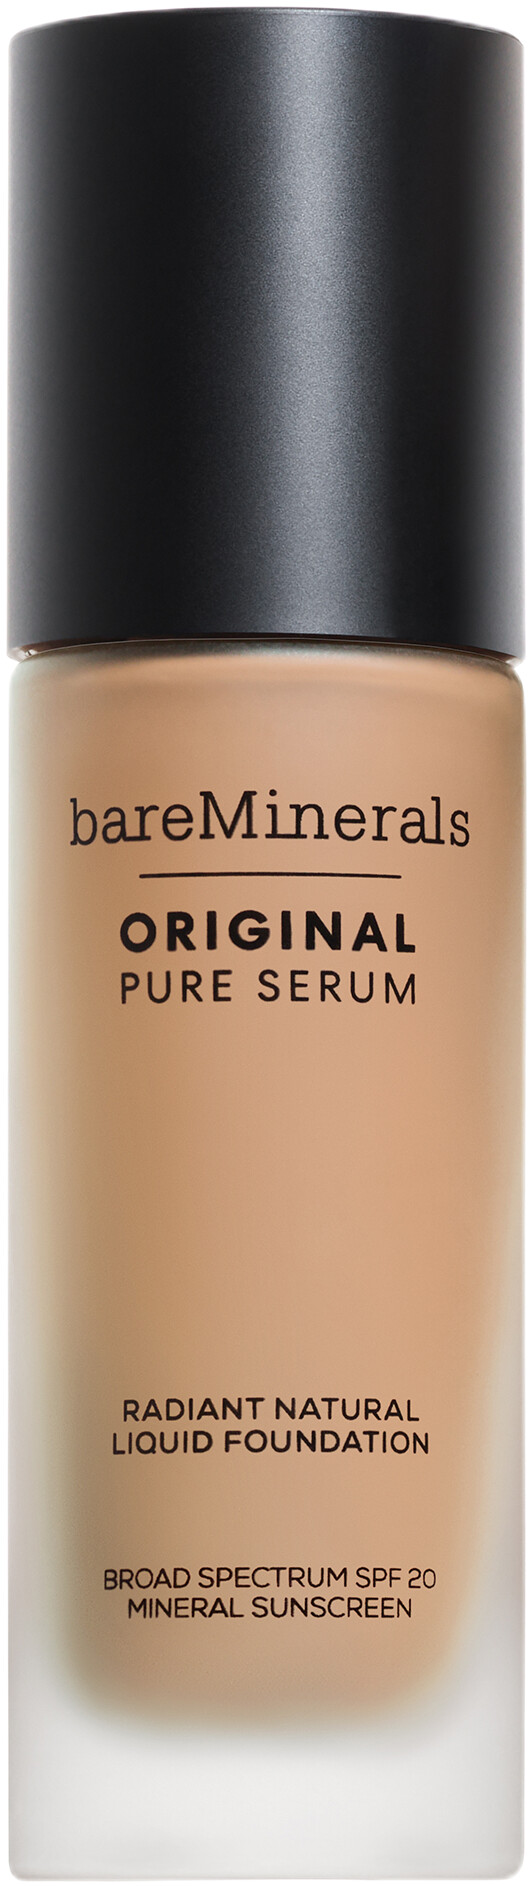 bareMinerals Original Pure Serum Radiant Natural Liquid Foundation SPF20 30ml 2.5 - Light Neutral